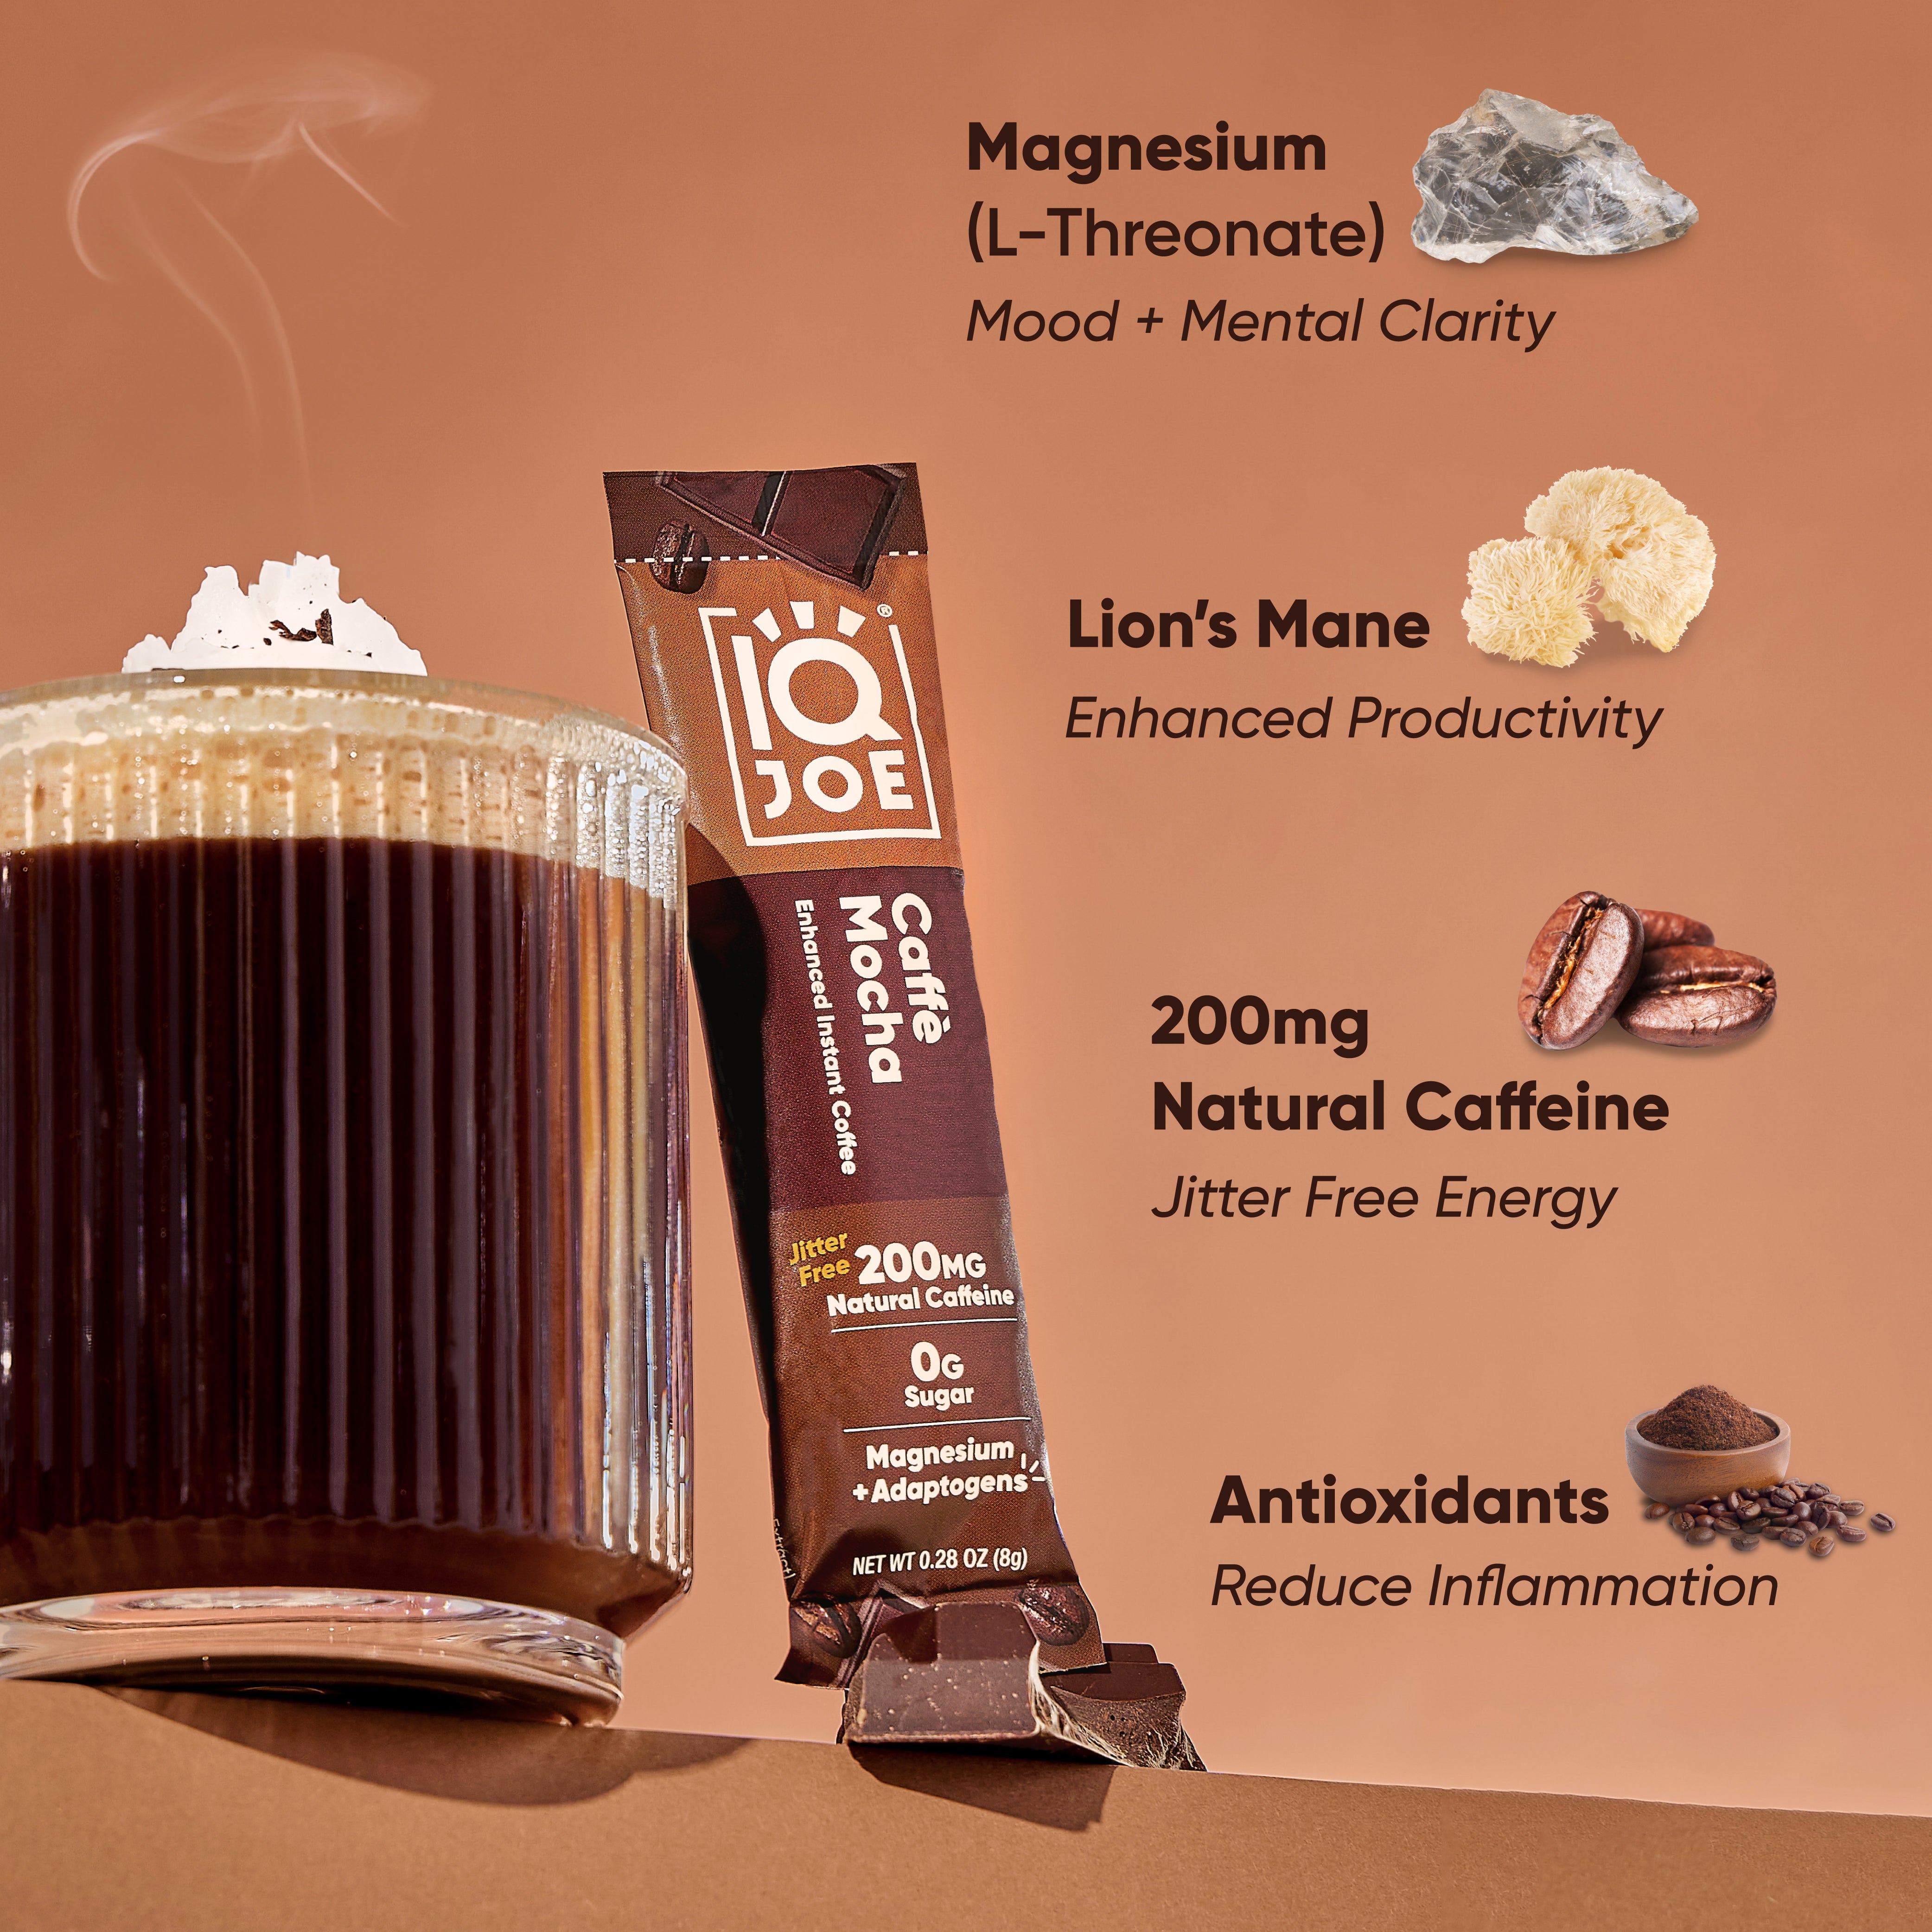 IQJOE Sampler Nootropic Coffee with Magnesium L-Threonate, Lion's Mane Mushroom, 200mg of Natural Caffeine, Antioxidants.